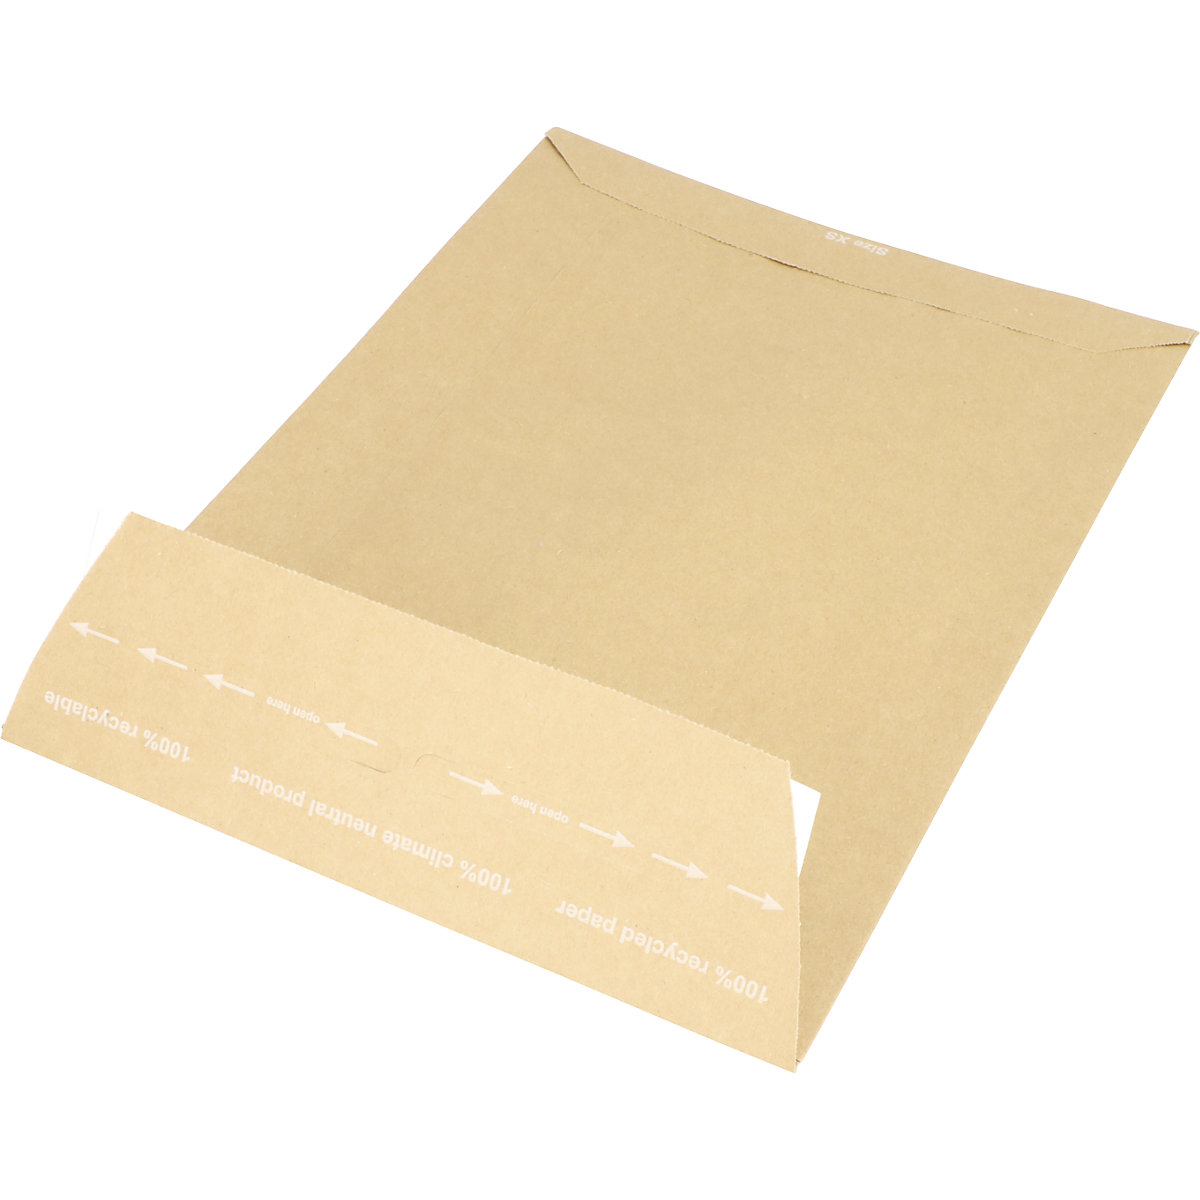 Versandtasche aus Papier E-Commerce terra, retourengeeignet, LxB 350 x 250 mm, VE 250 Stk, ab 10 VE-4